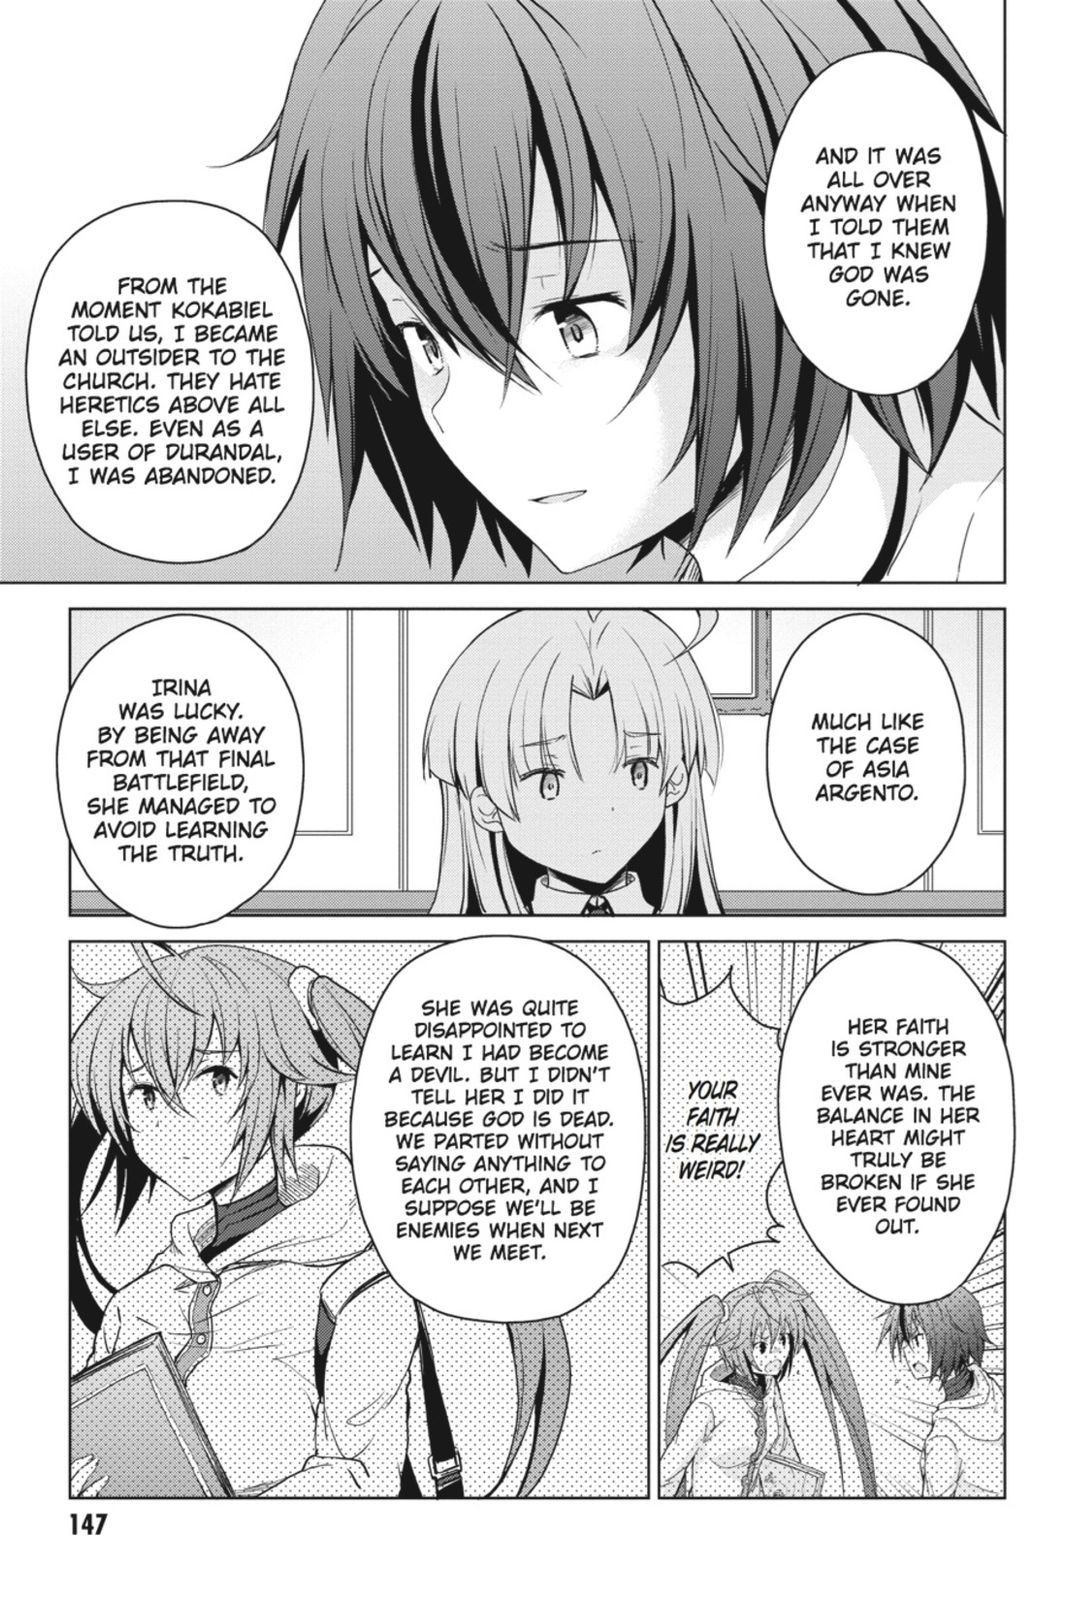 High School DxD, Chapter 35 - High School DxD Manga Online